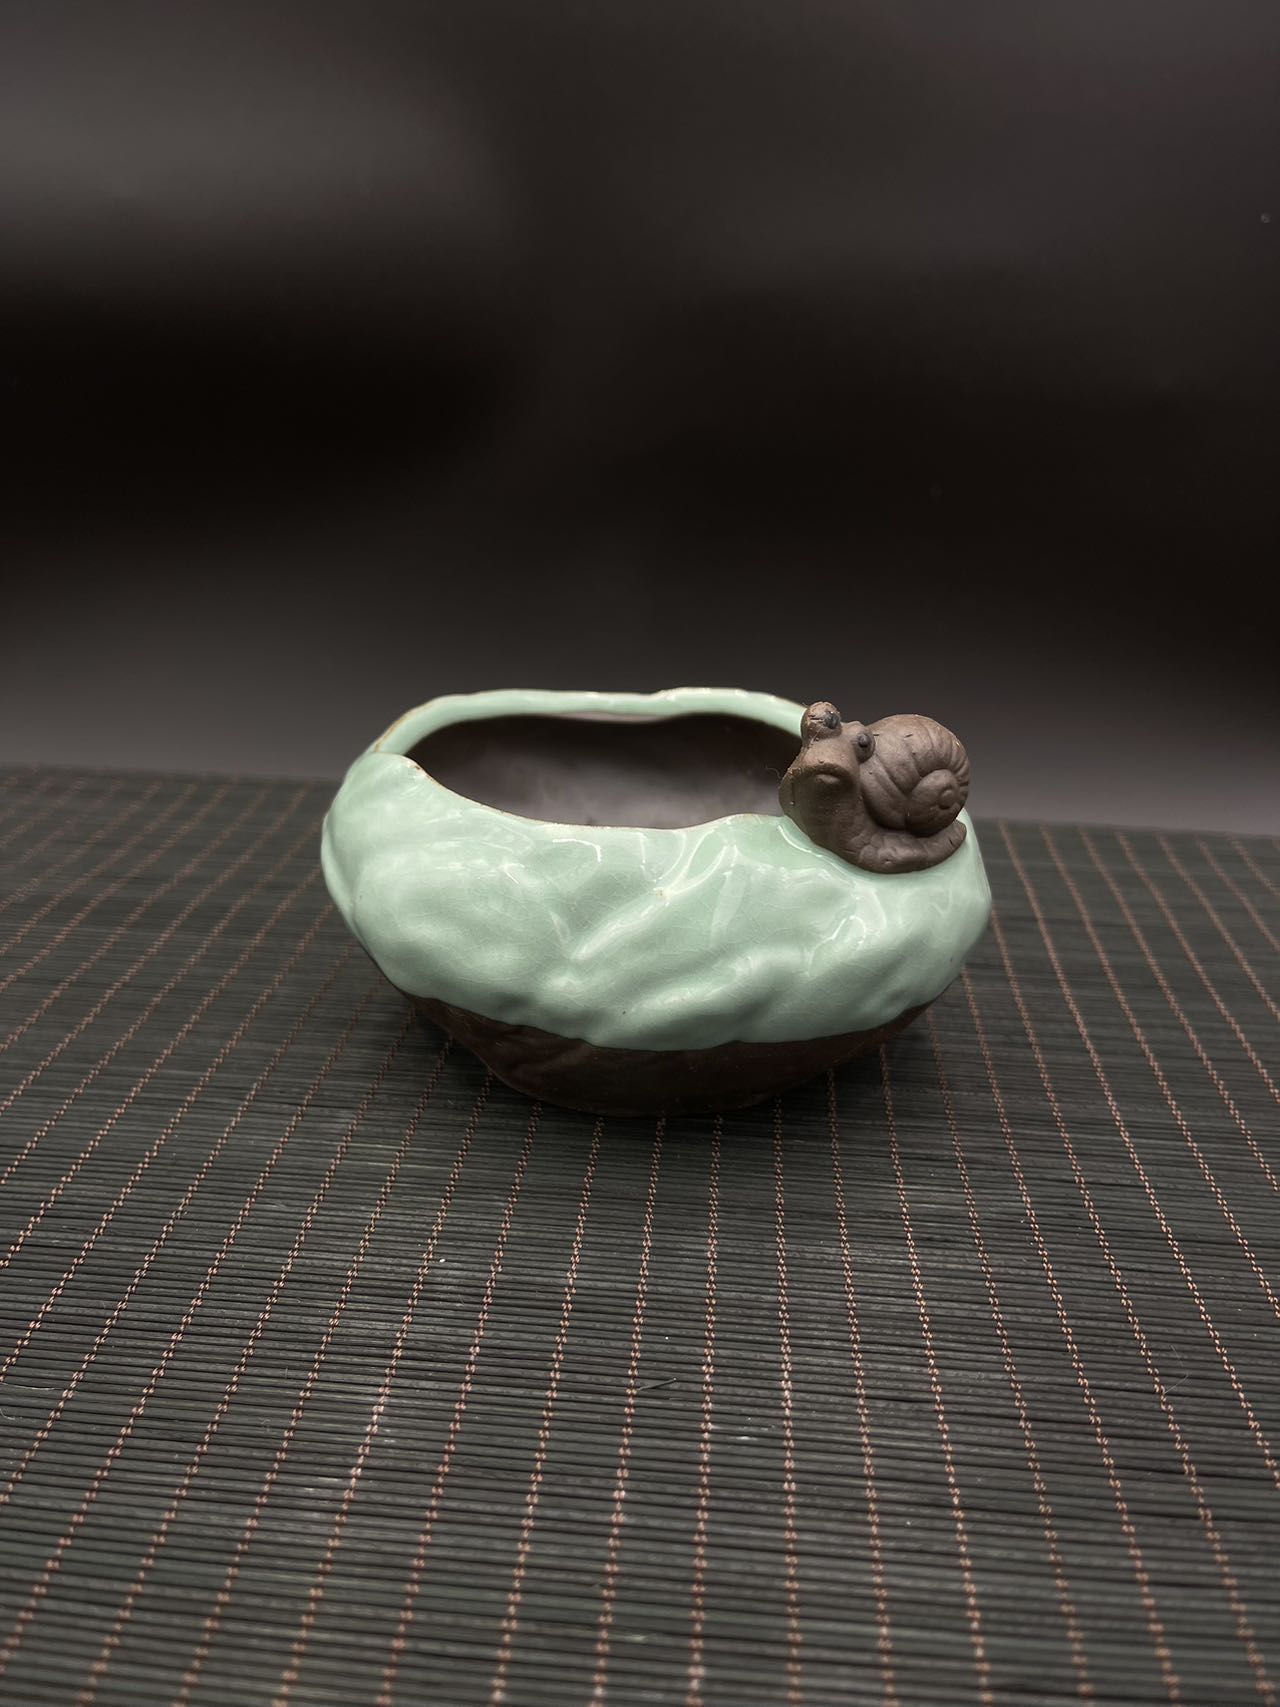 Decorative Garden Pot with Snail